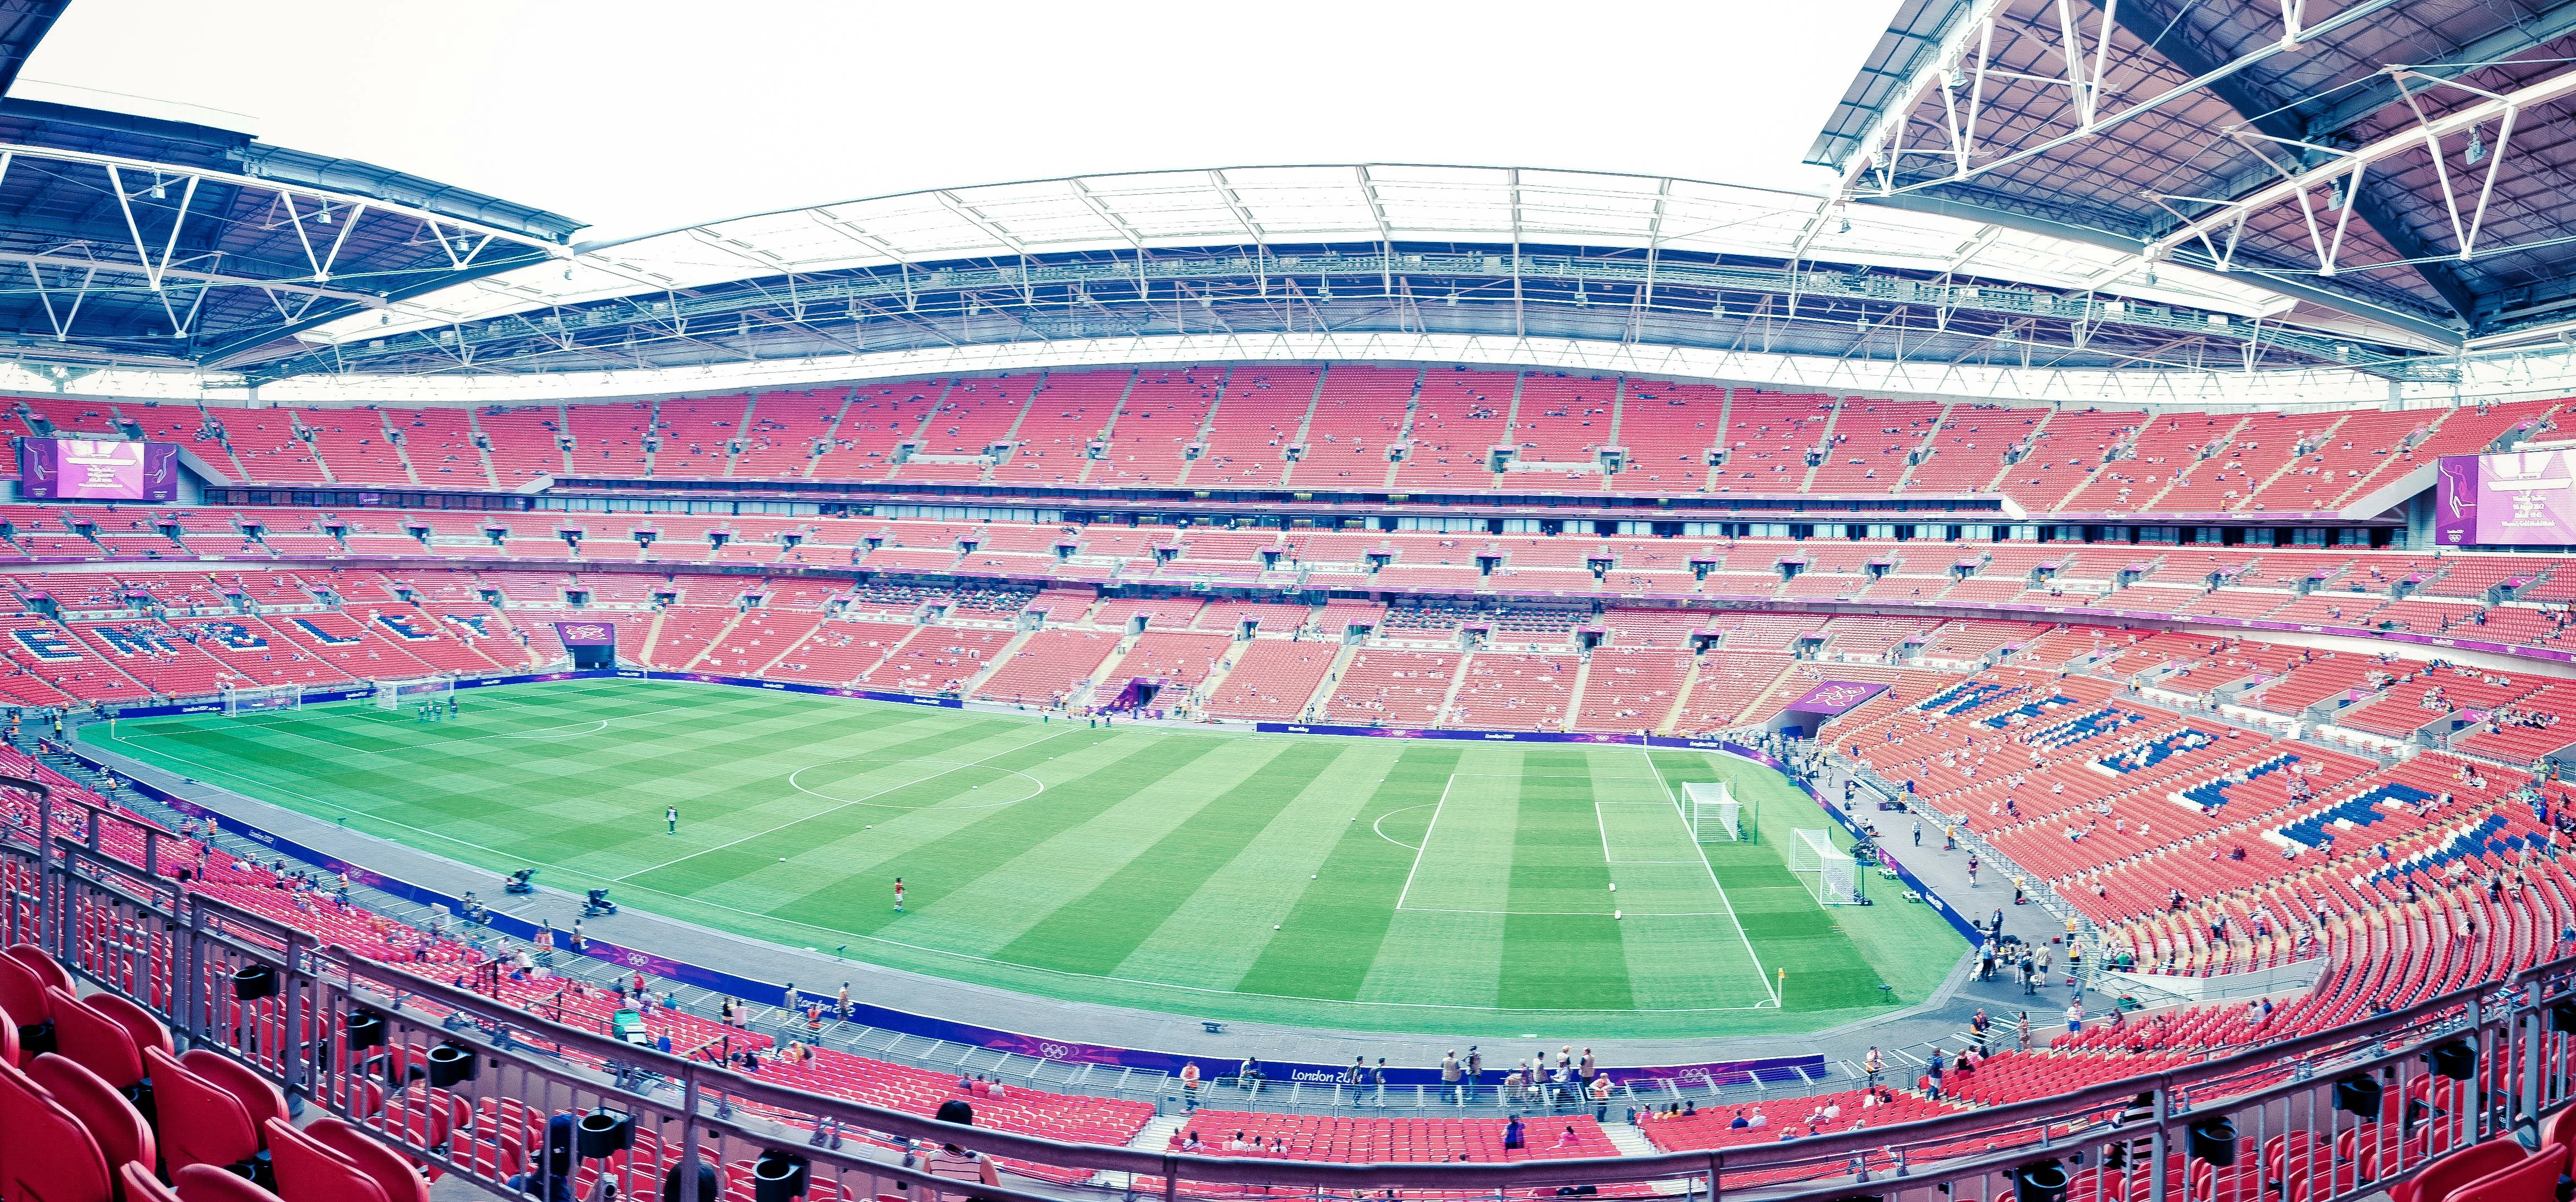 Wembley Stadium / August 2012